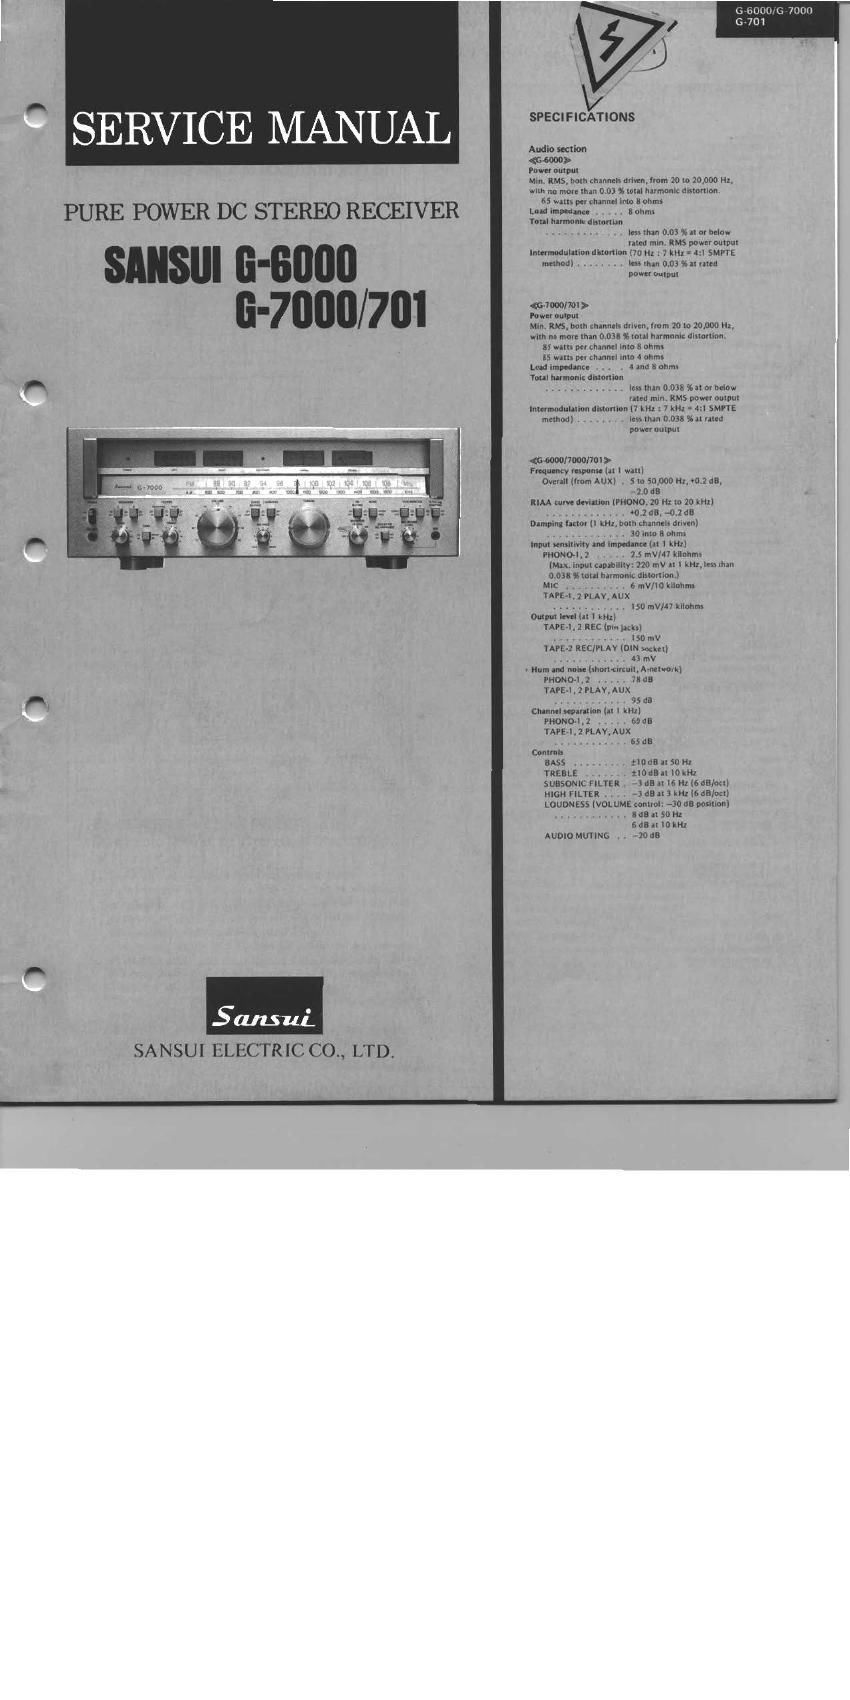 Sansui G 701 Service Manual